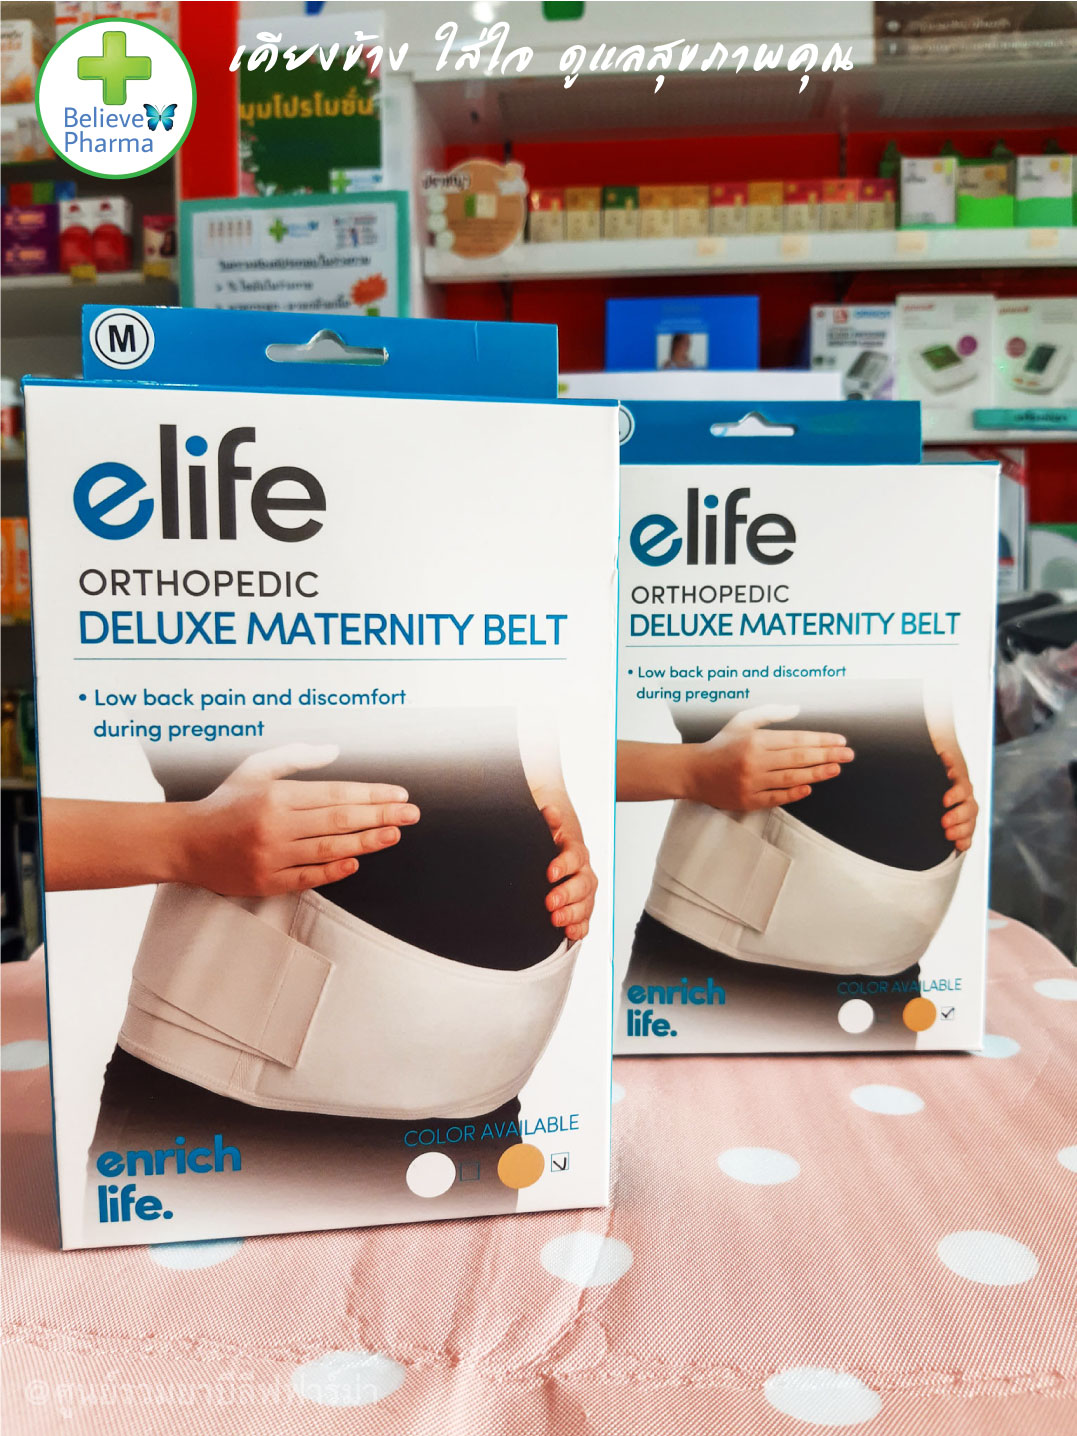 Elife Deluxe Maternity Belt (เข็มขัดพยุงครรภ์) 